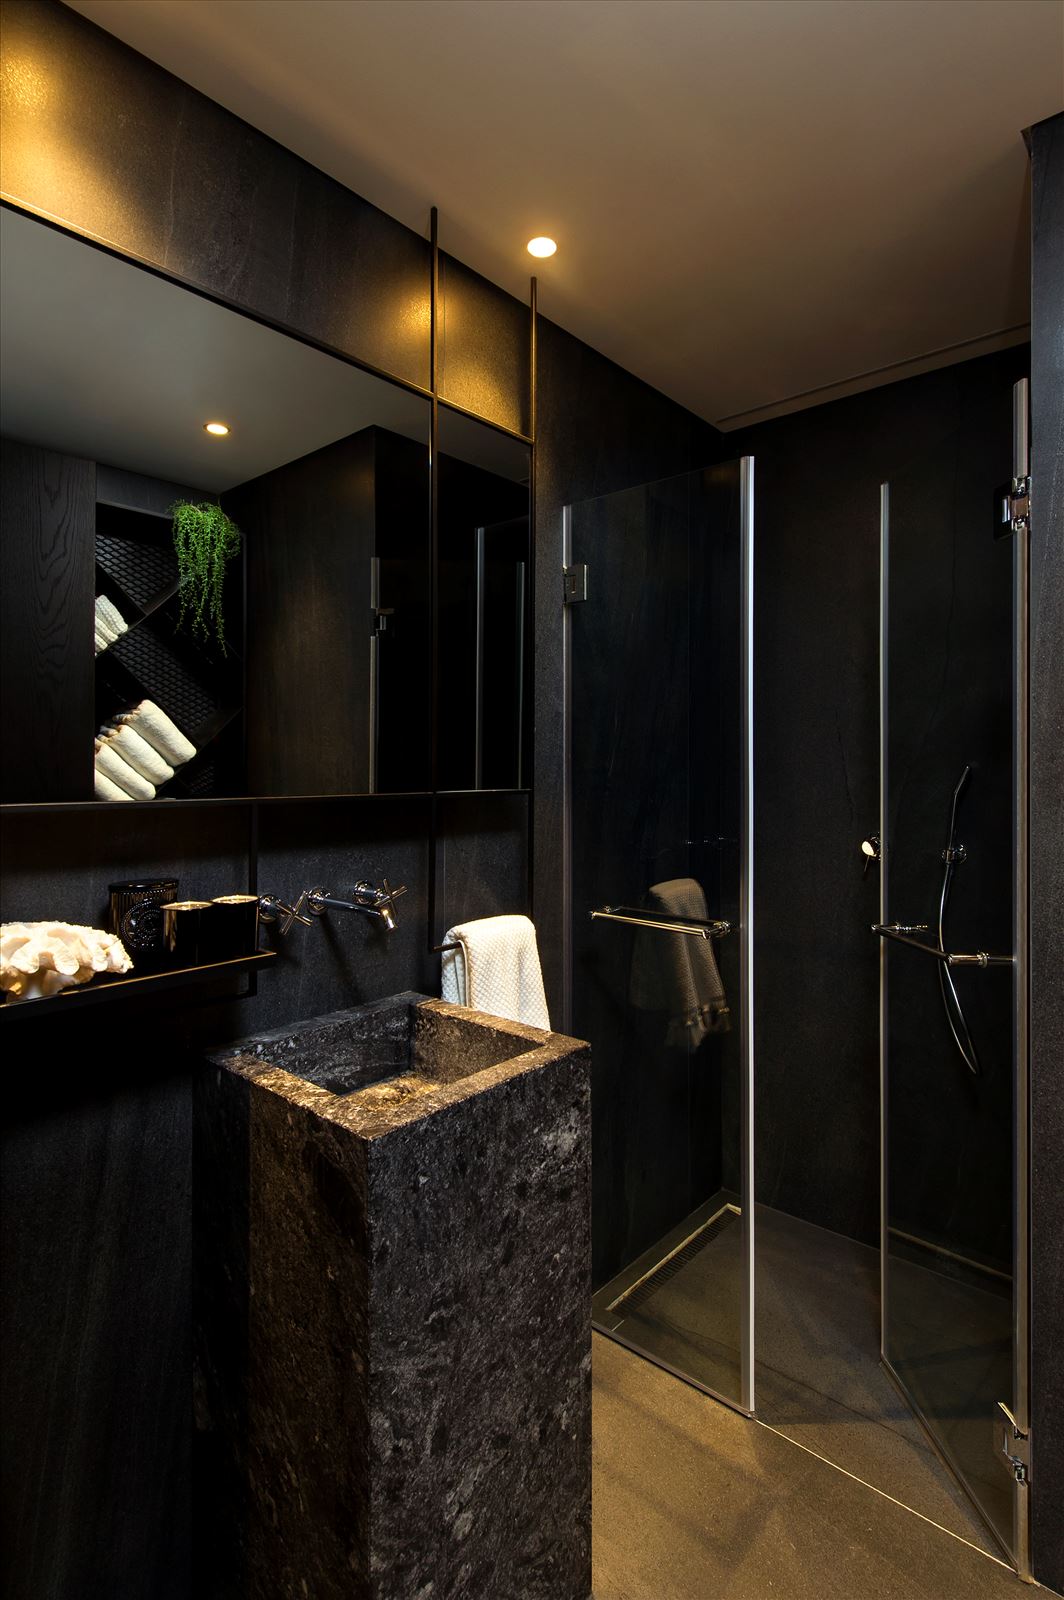 Penthouse - Petah Tikva גוף תאורה מיוחד מאיר את חדר האמבטיה נעשה על ידי דורי קמחי